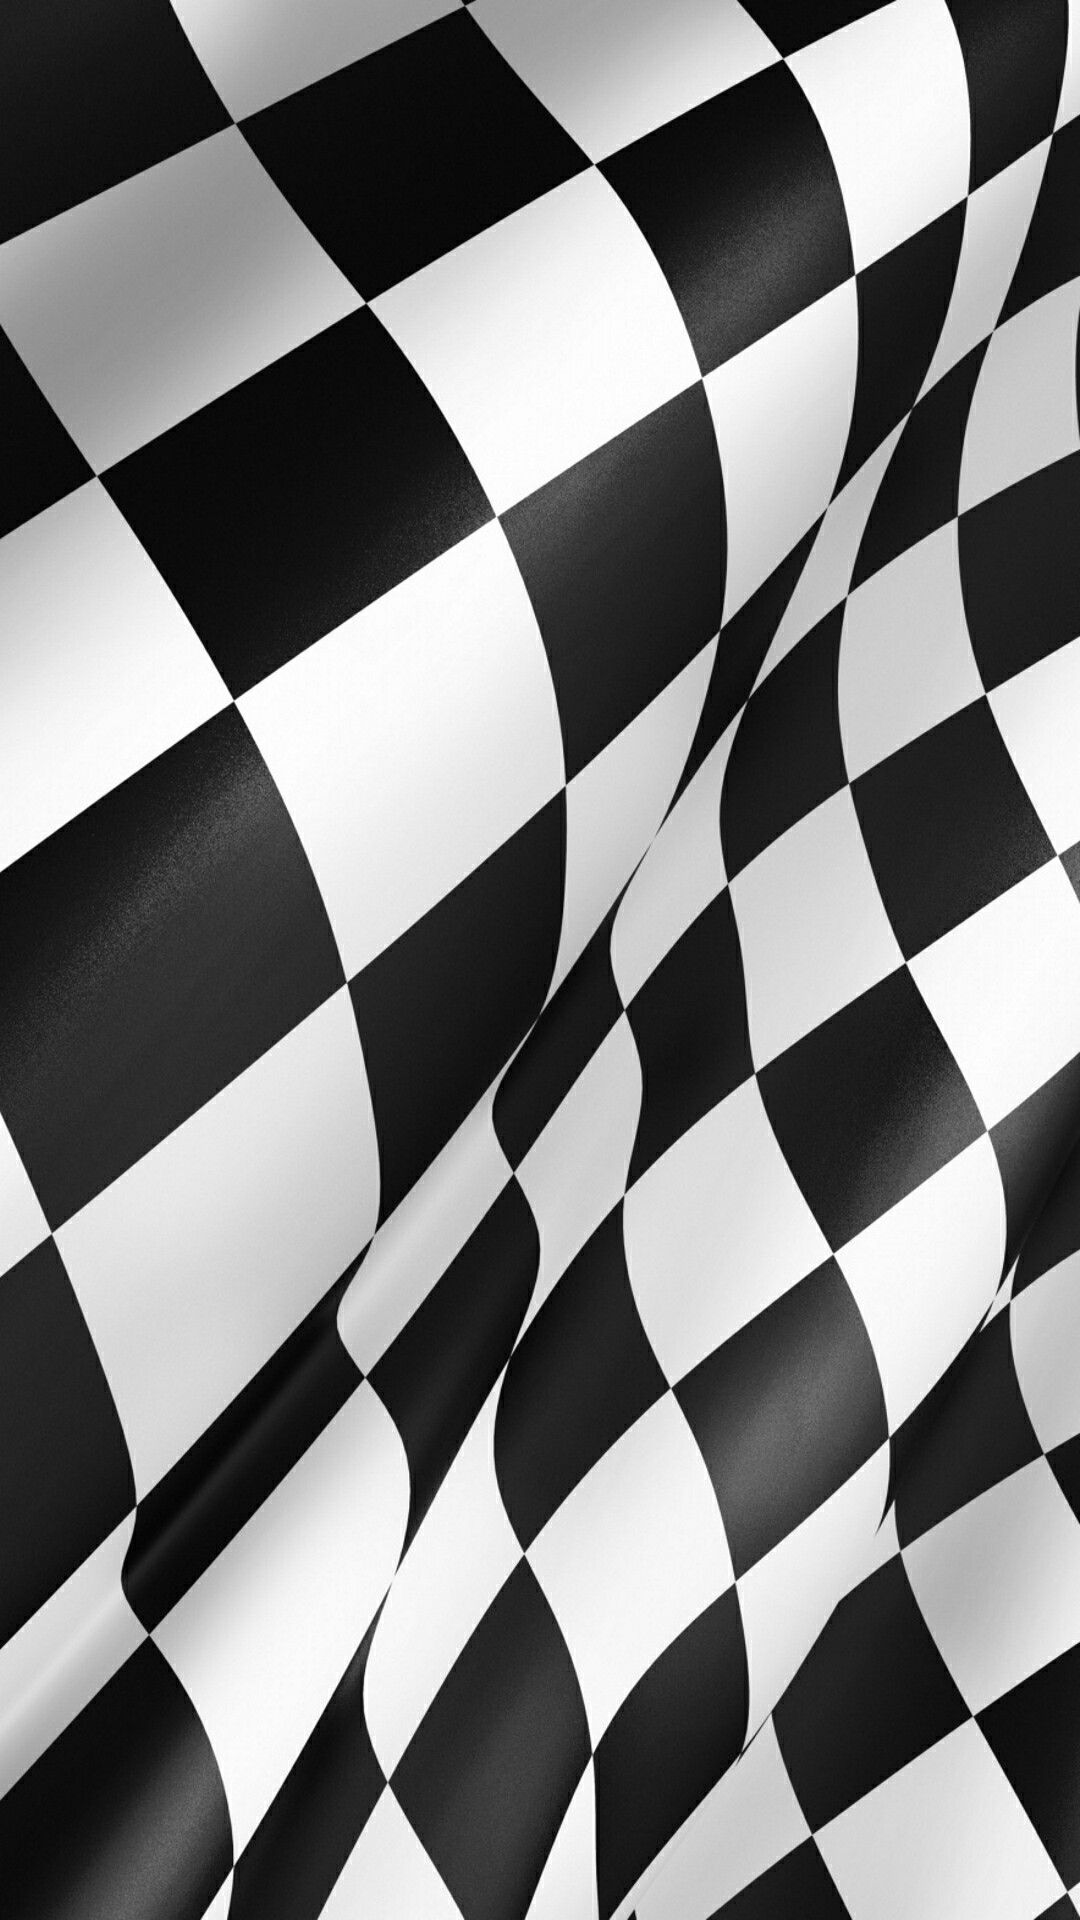 Checkered Flag Wallpaper